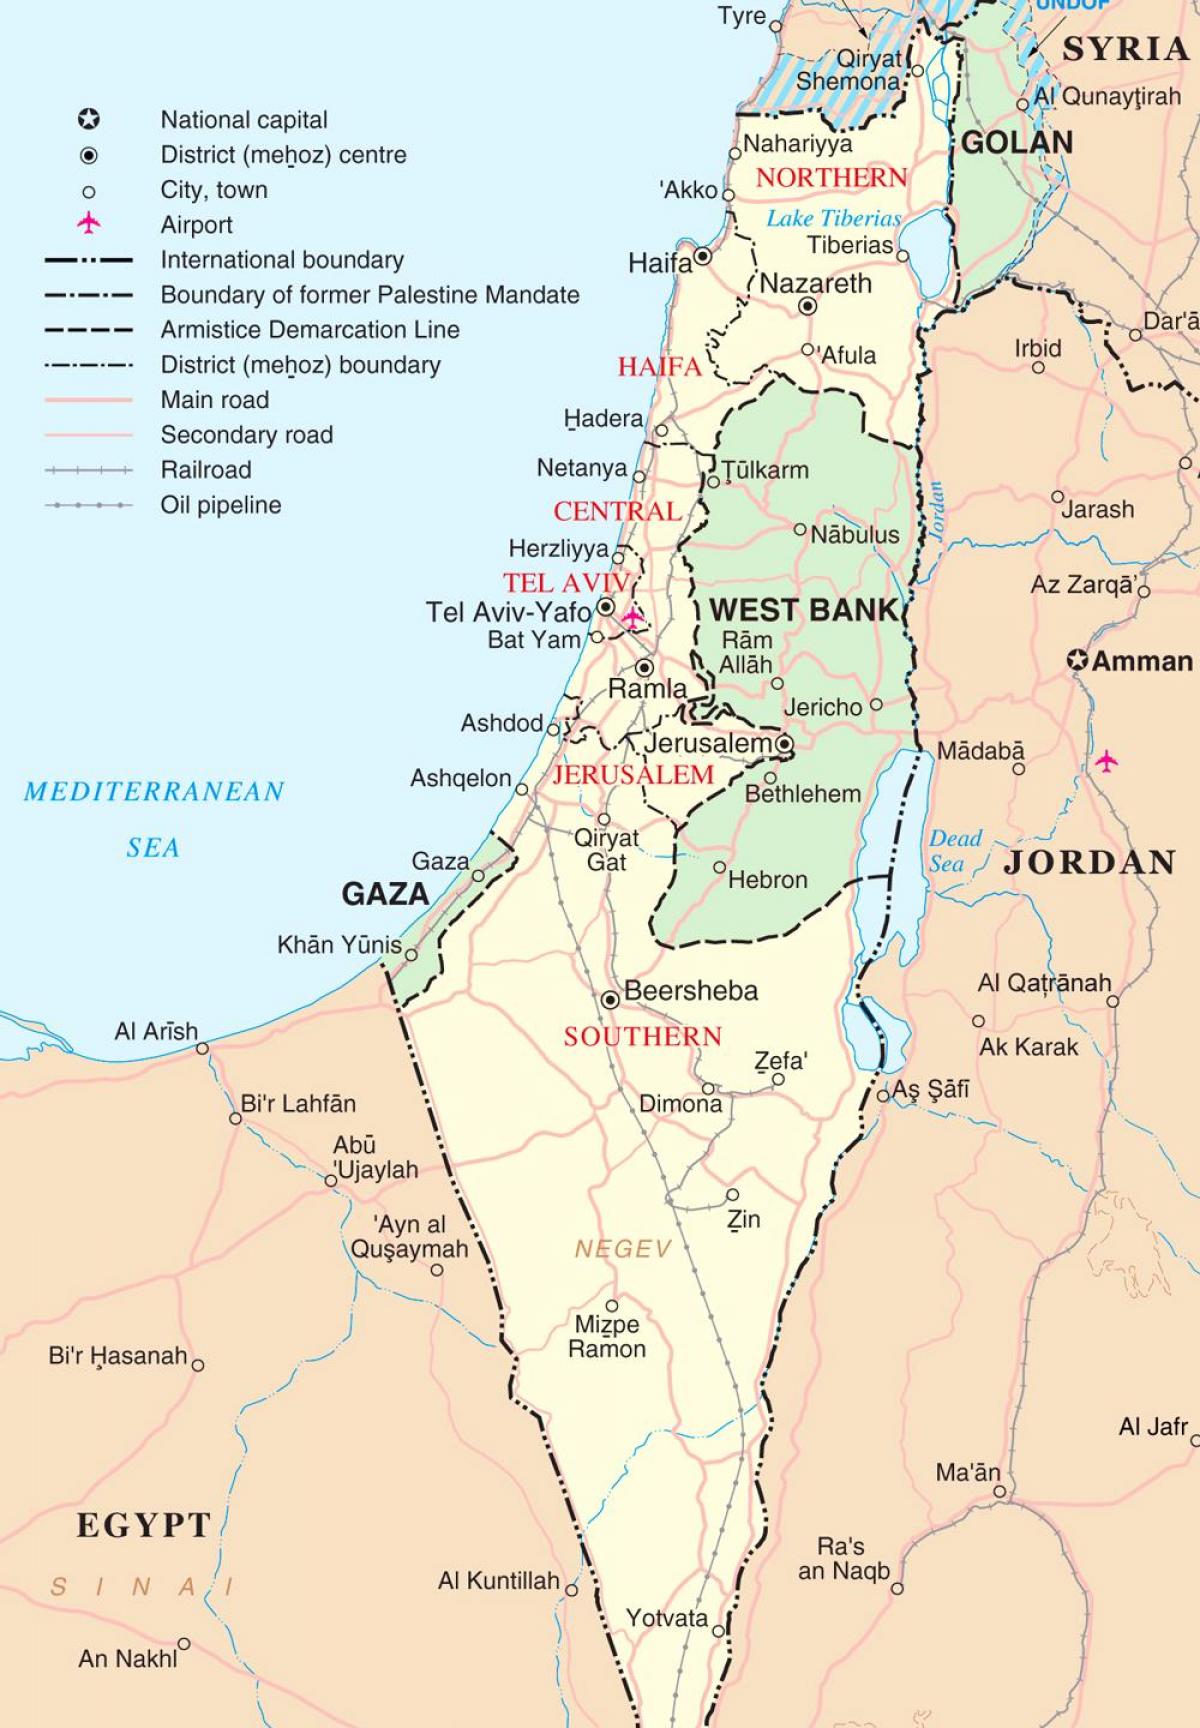 नक्शा इसराइल के पर्यटन